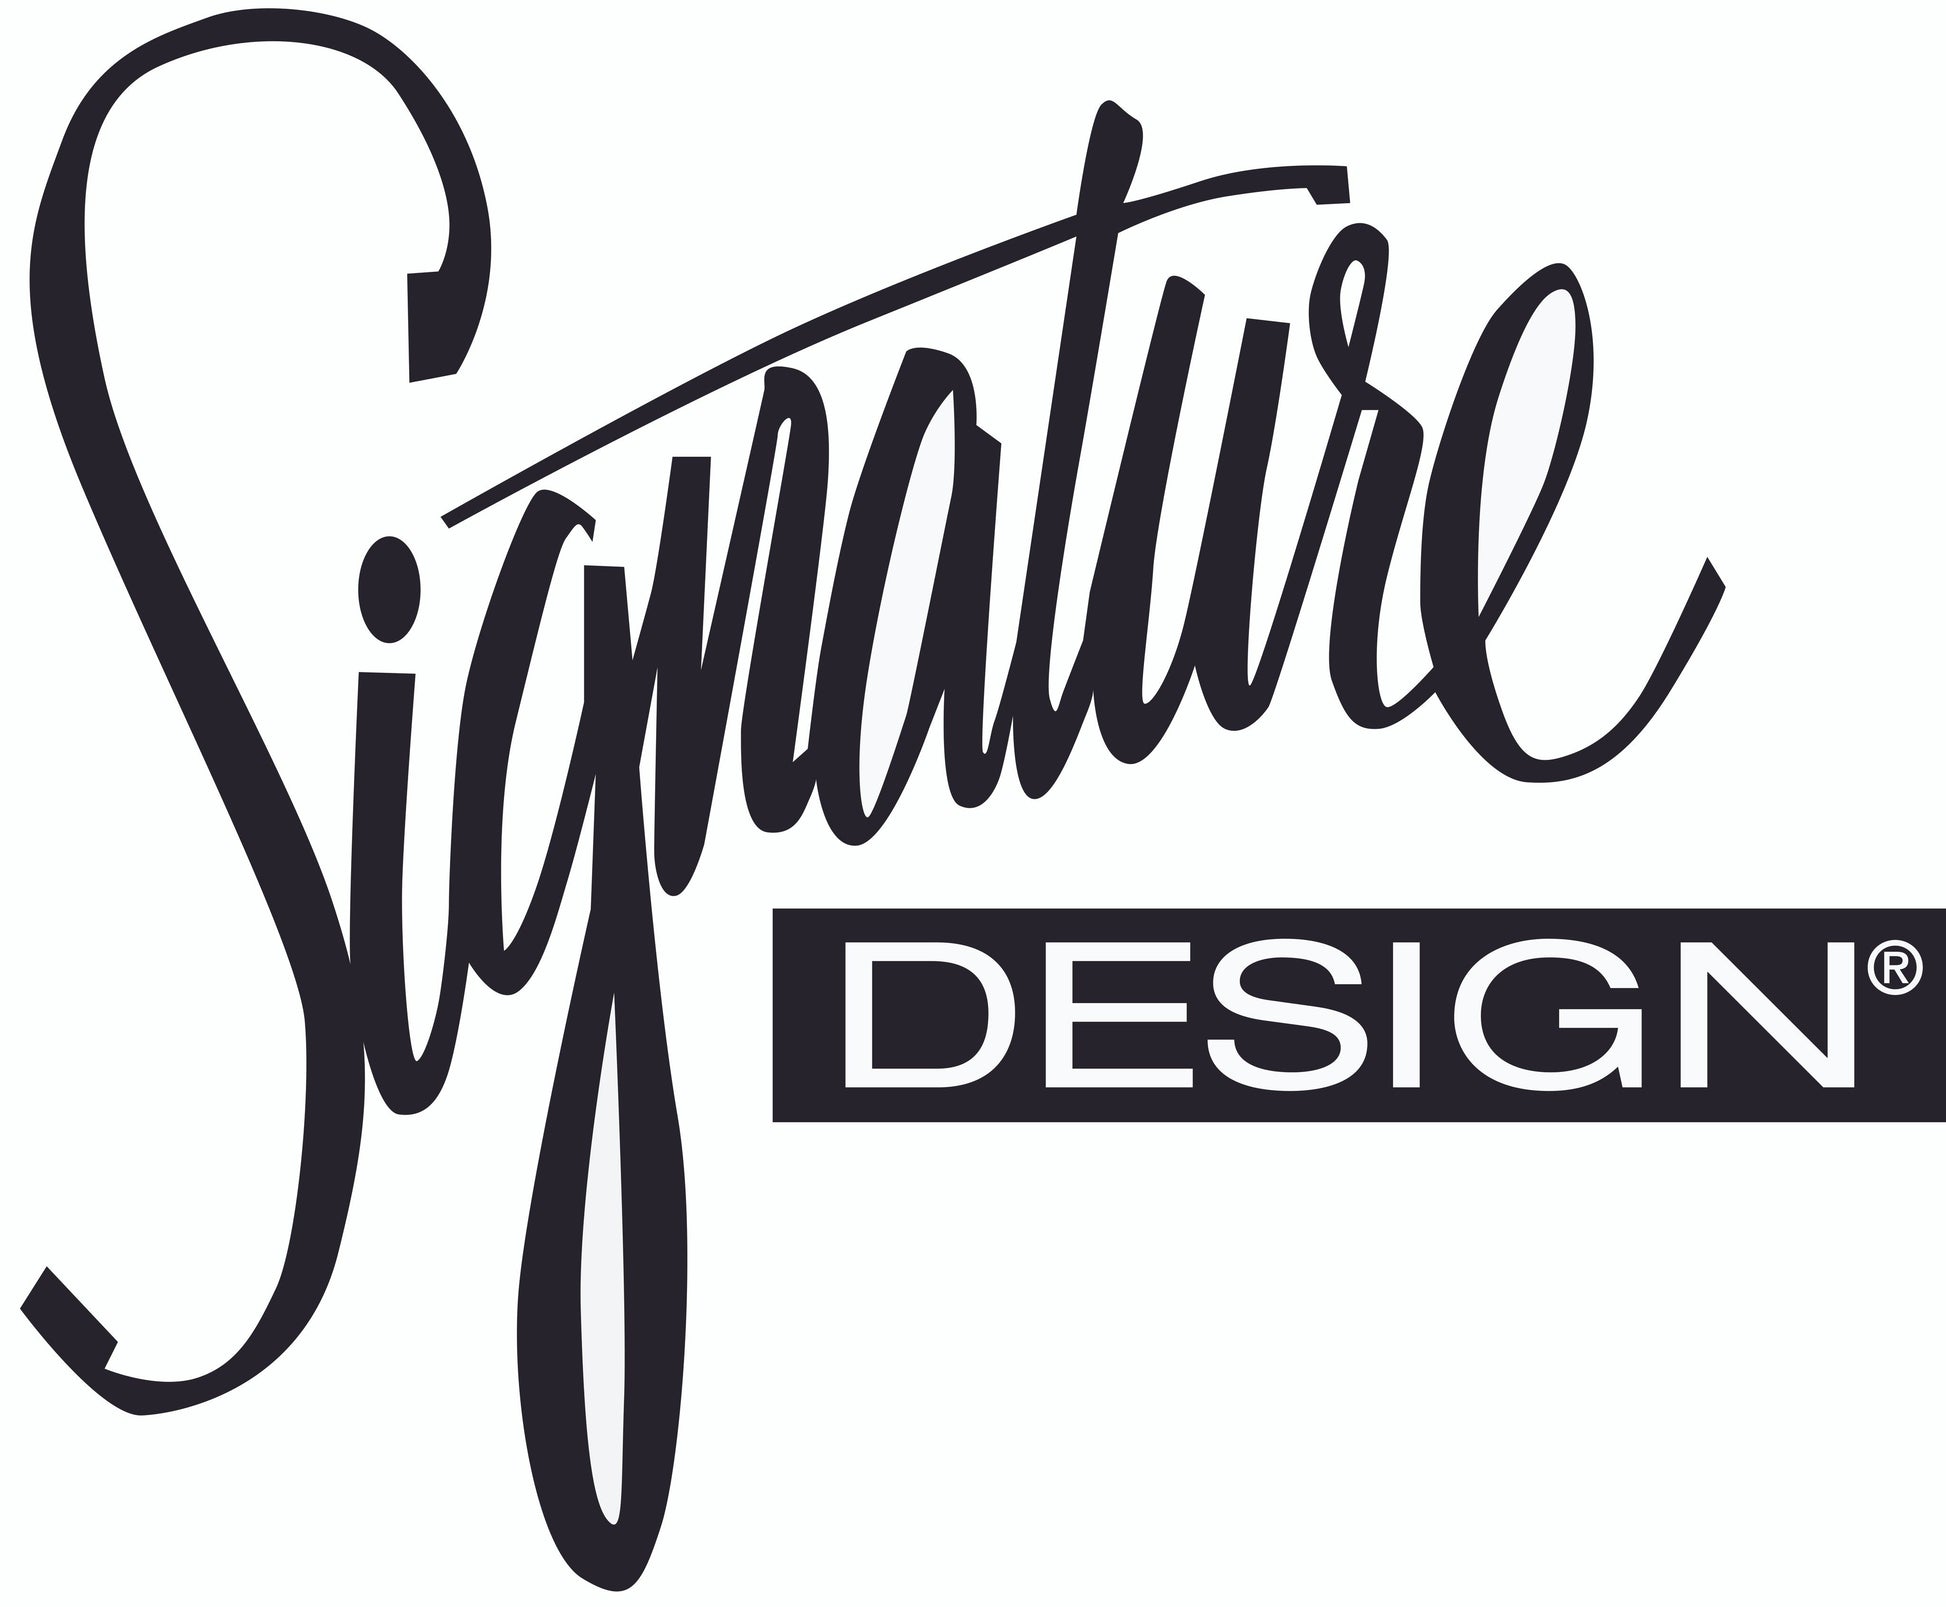 Elmferd Adjustable Height Desk Signature Design by Ashley®